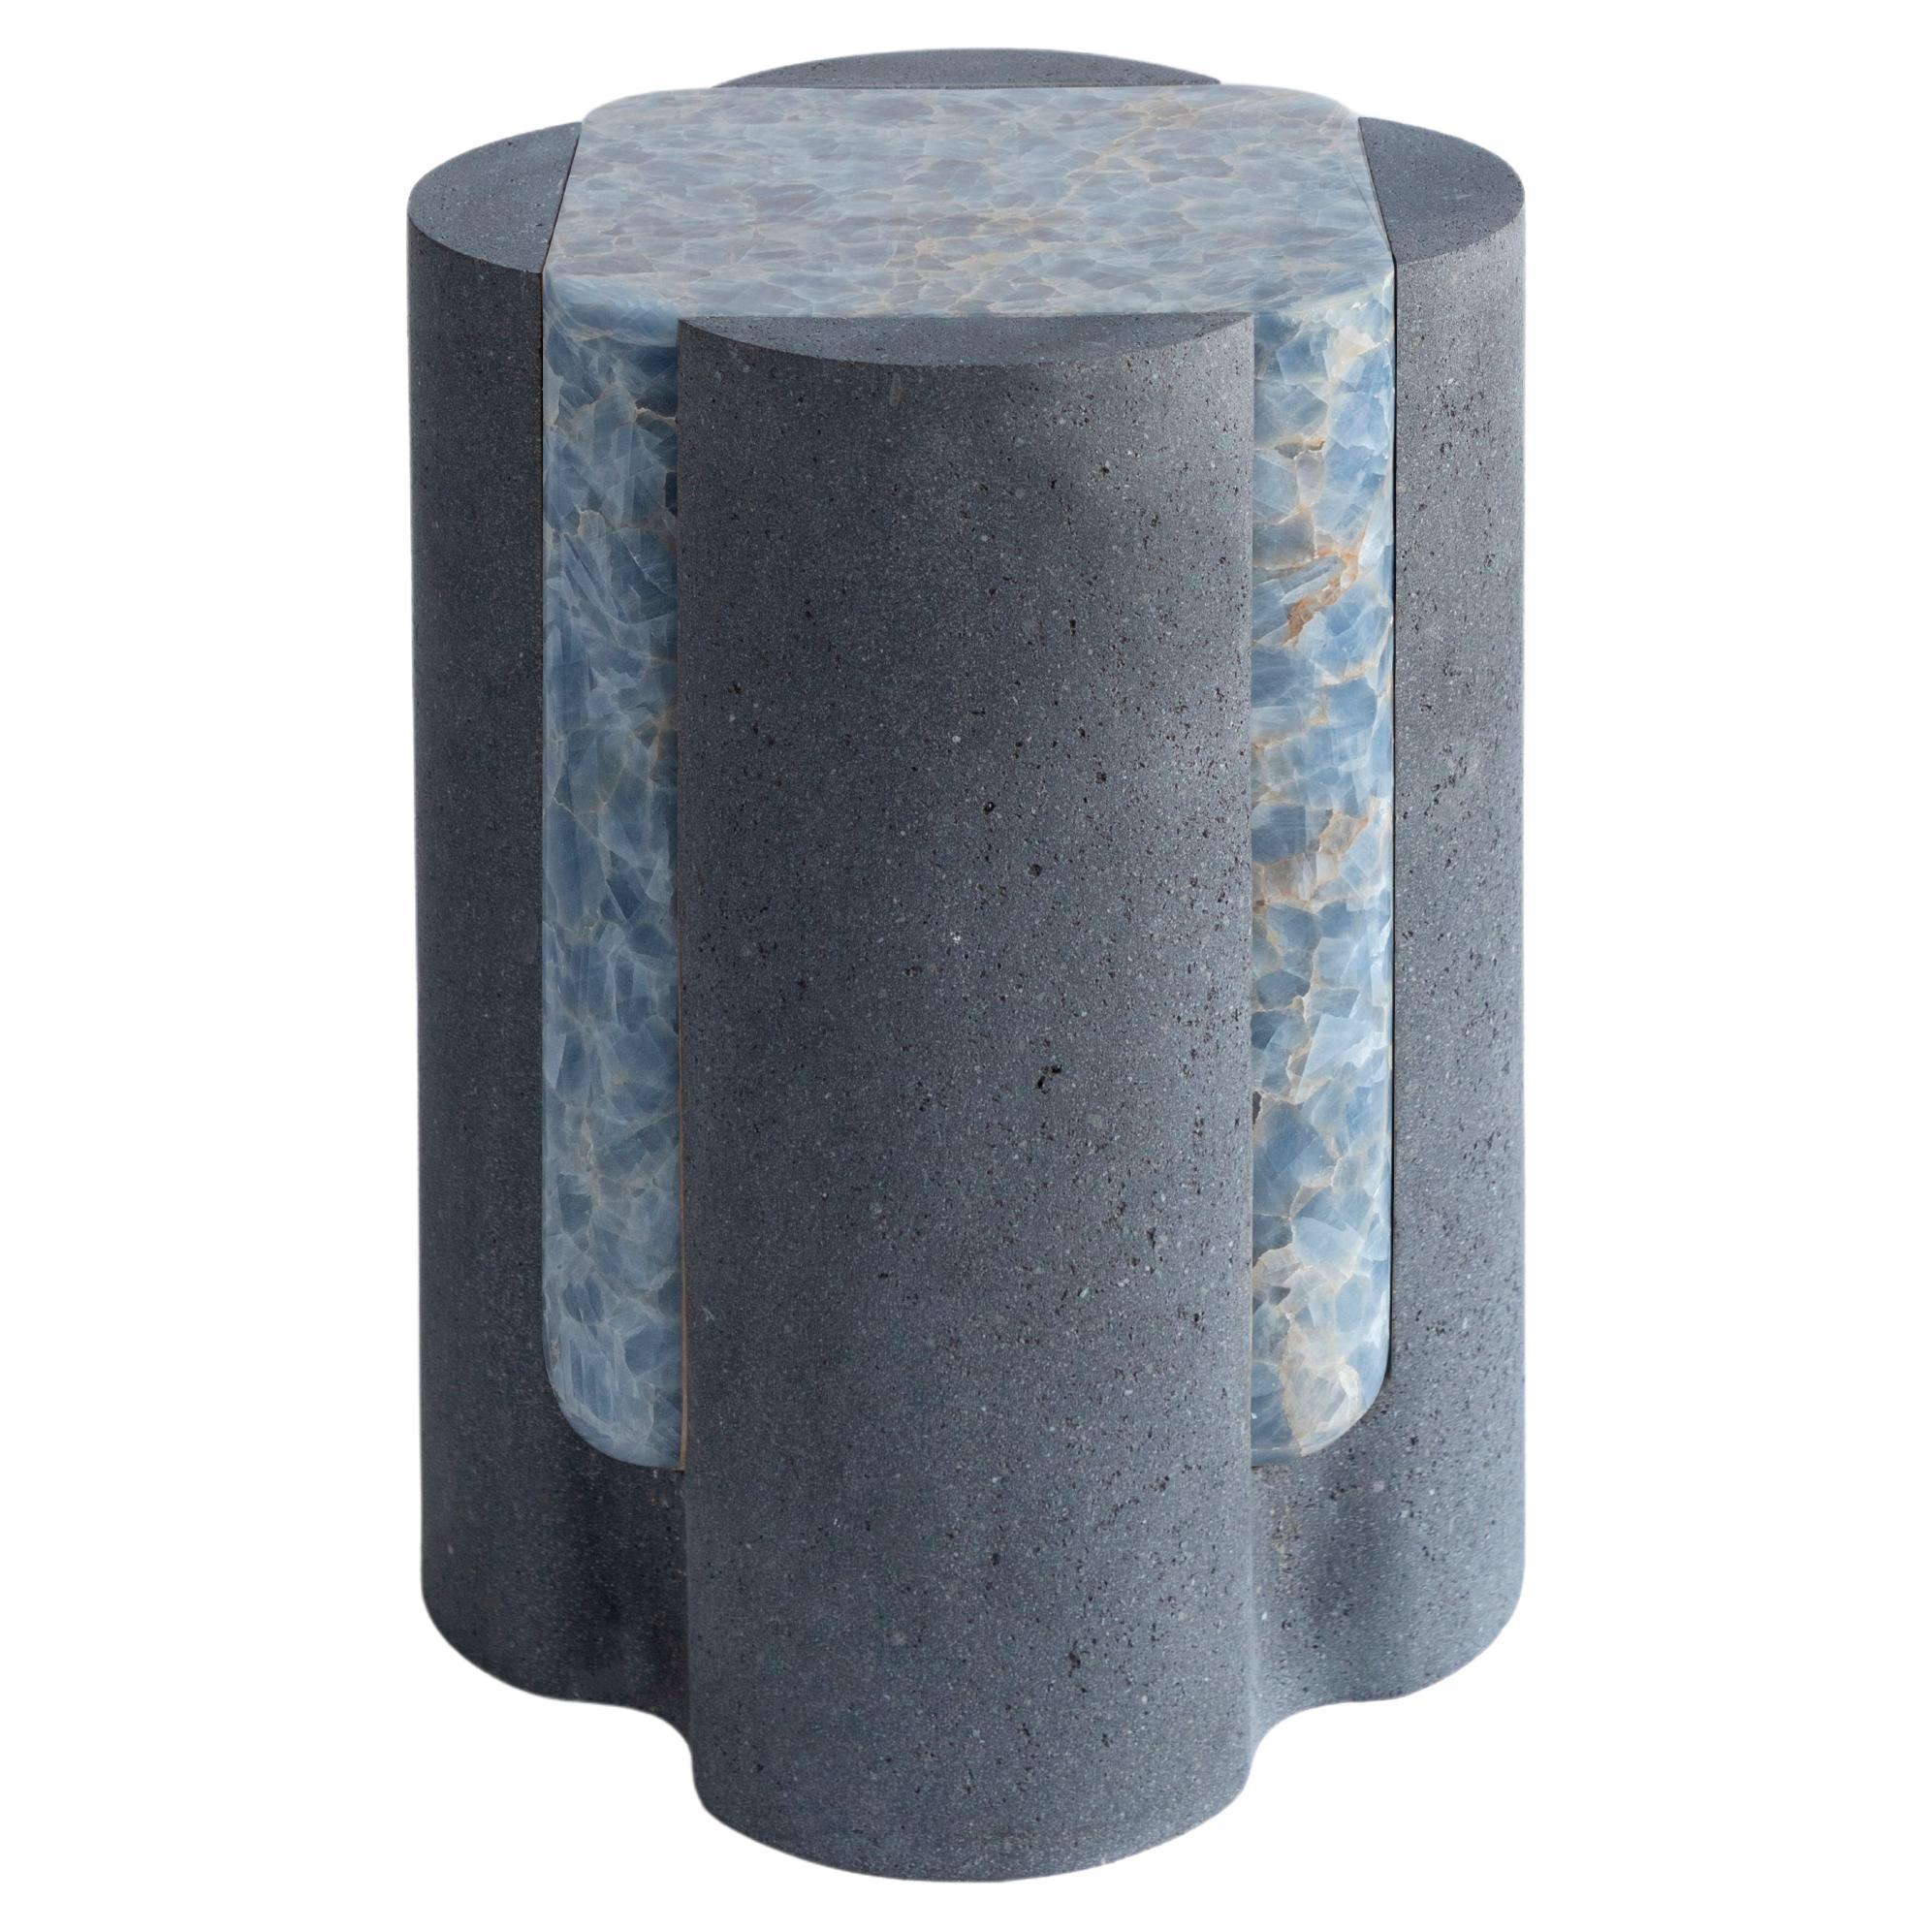 Volcanic Shades II - Sten Studio - Lava stone and blue calcite For Sale